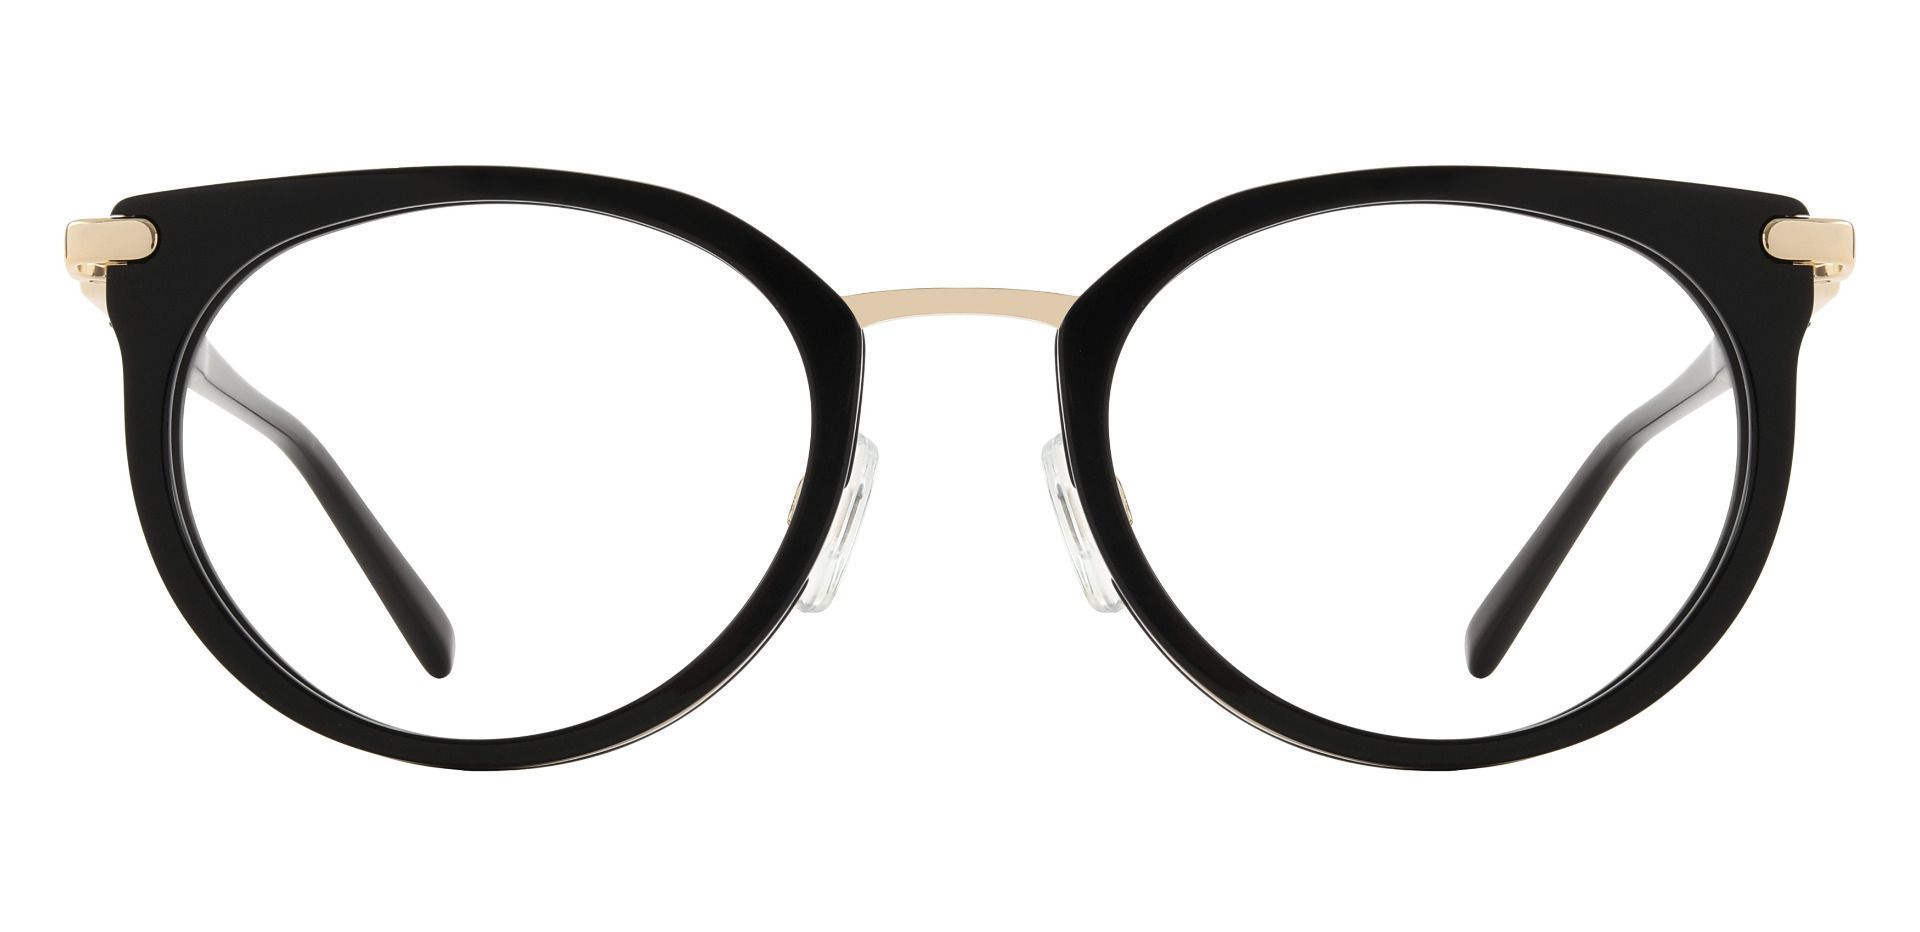 Louisville Oval Prescription Glasses Black Women's Eyeglasses